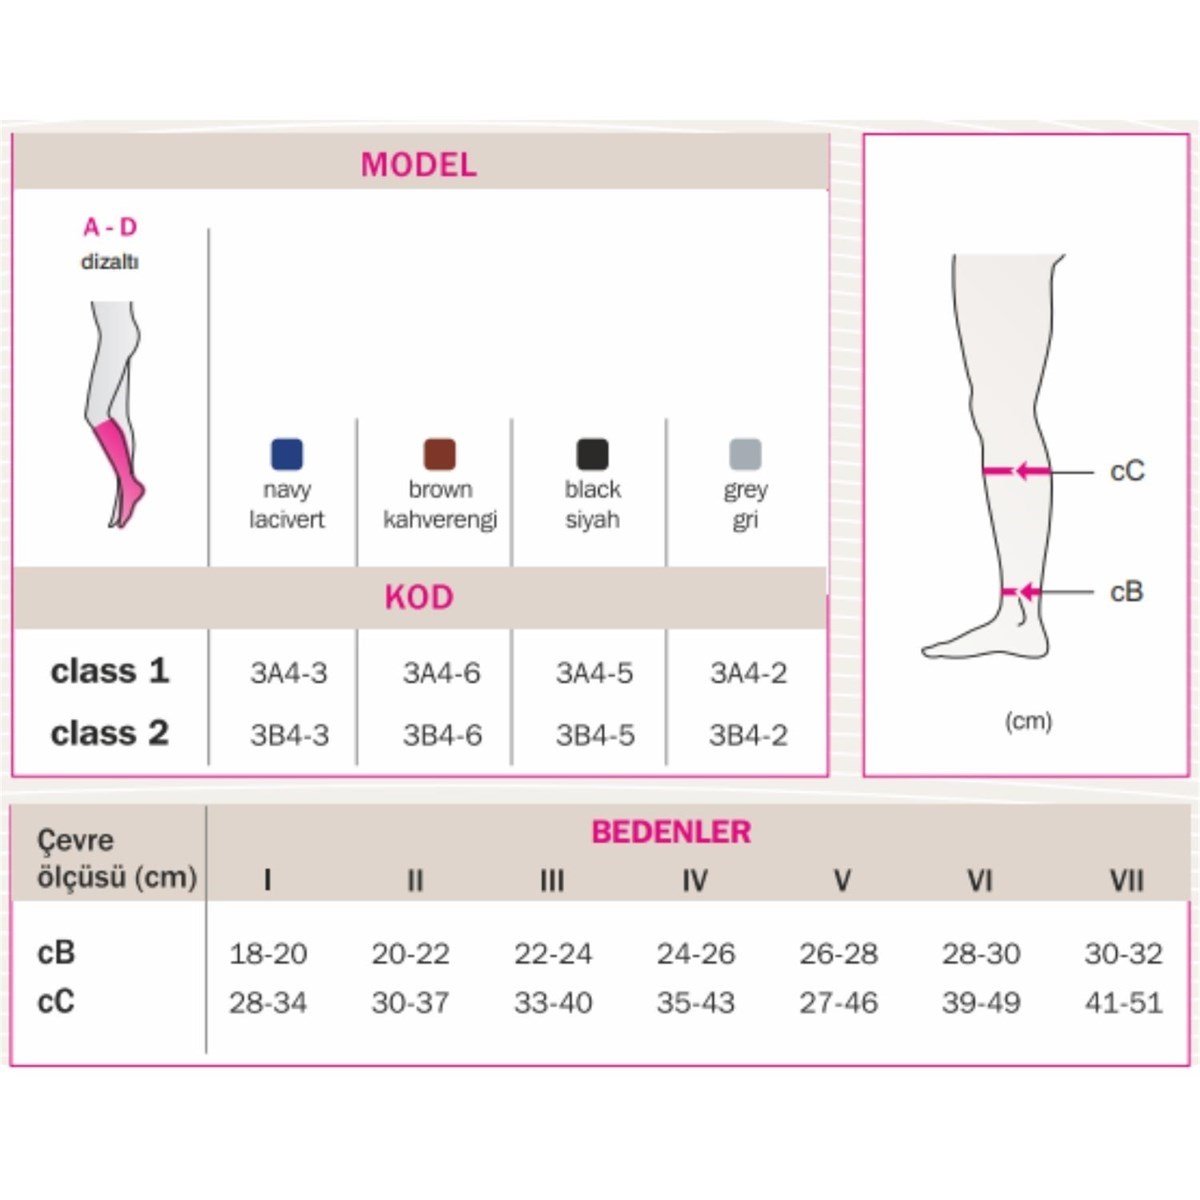 CCL1 3B4-3 Mediven for Men Varis Çorabı (Lacivert)